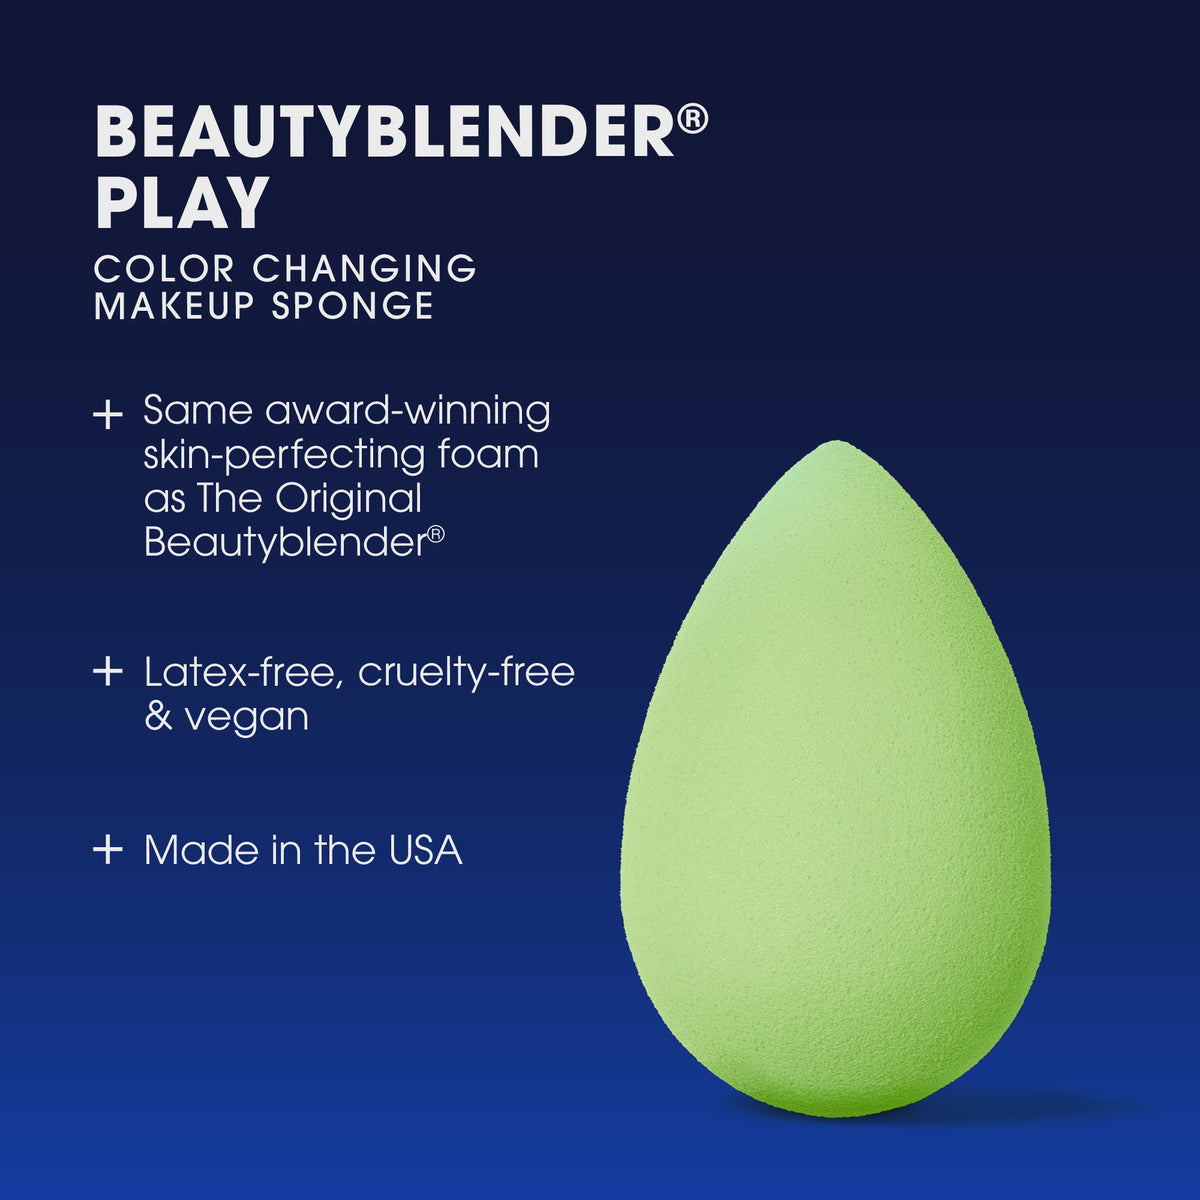 Beautyblender® Play Color Changing Makeup Sponge.